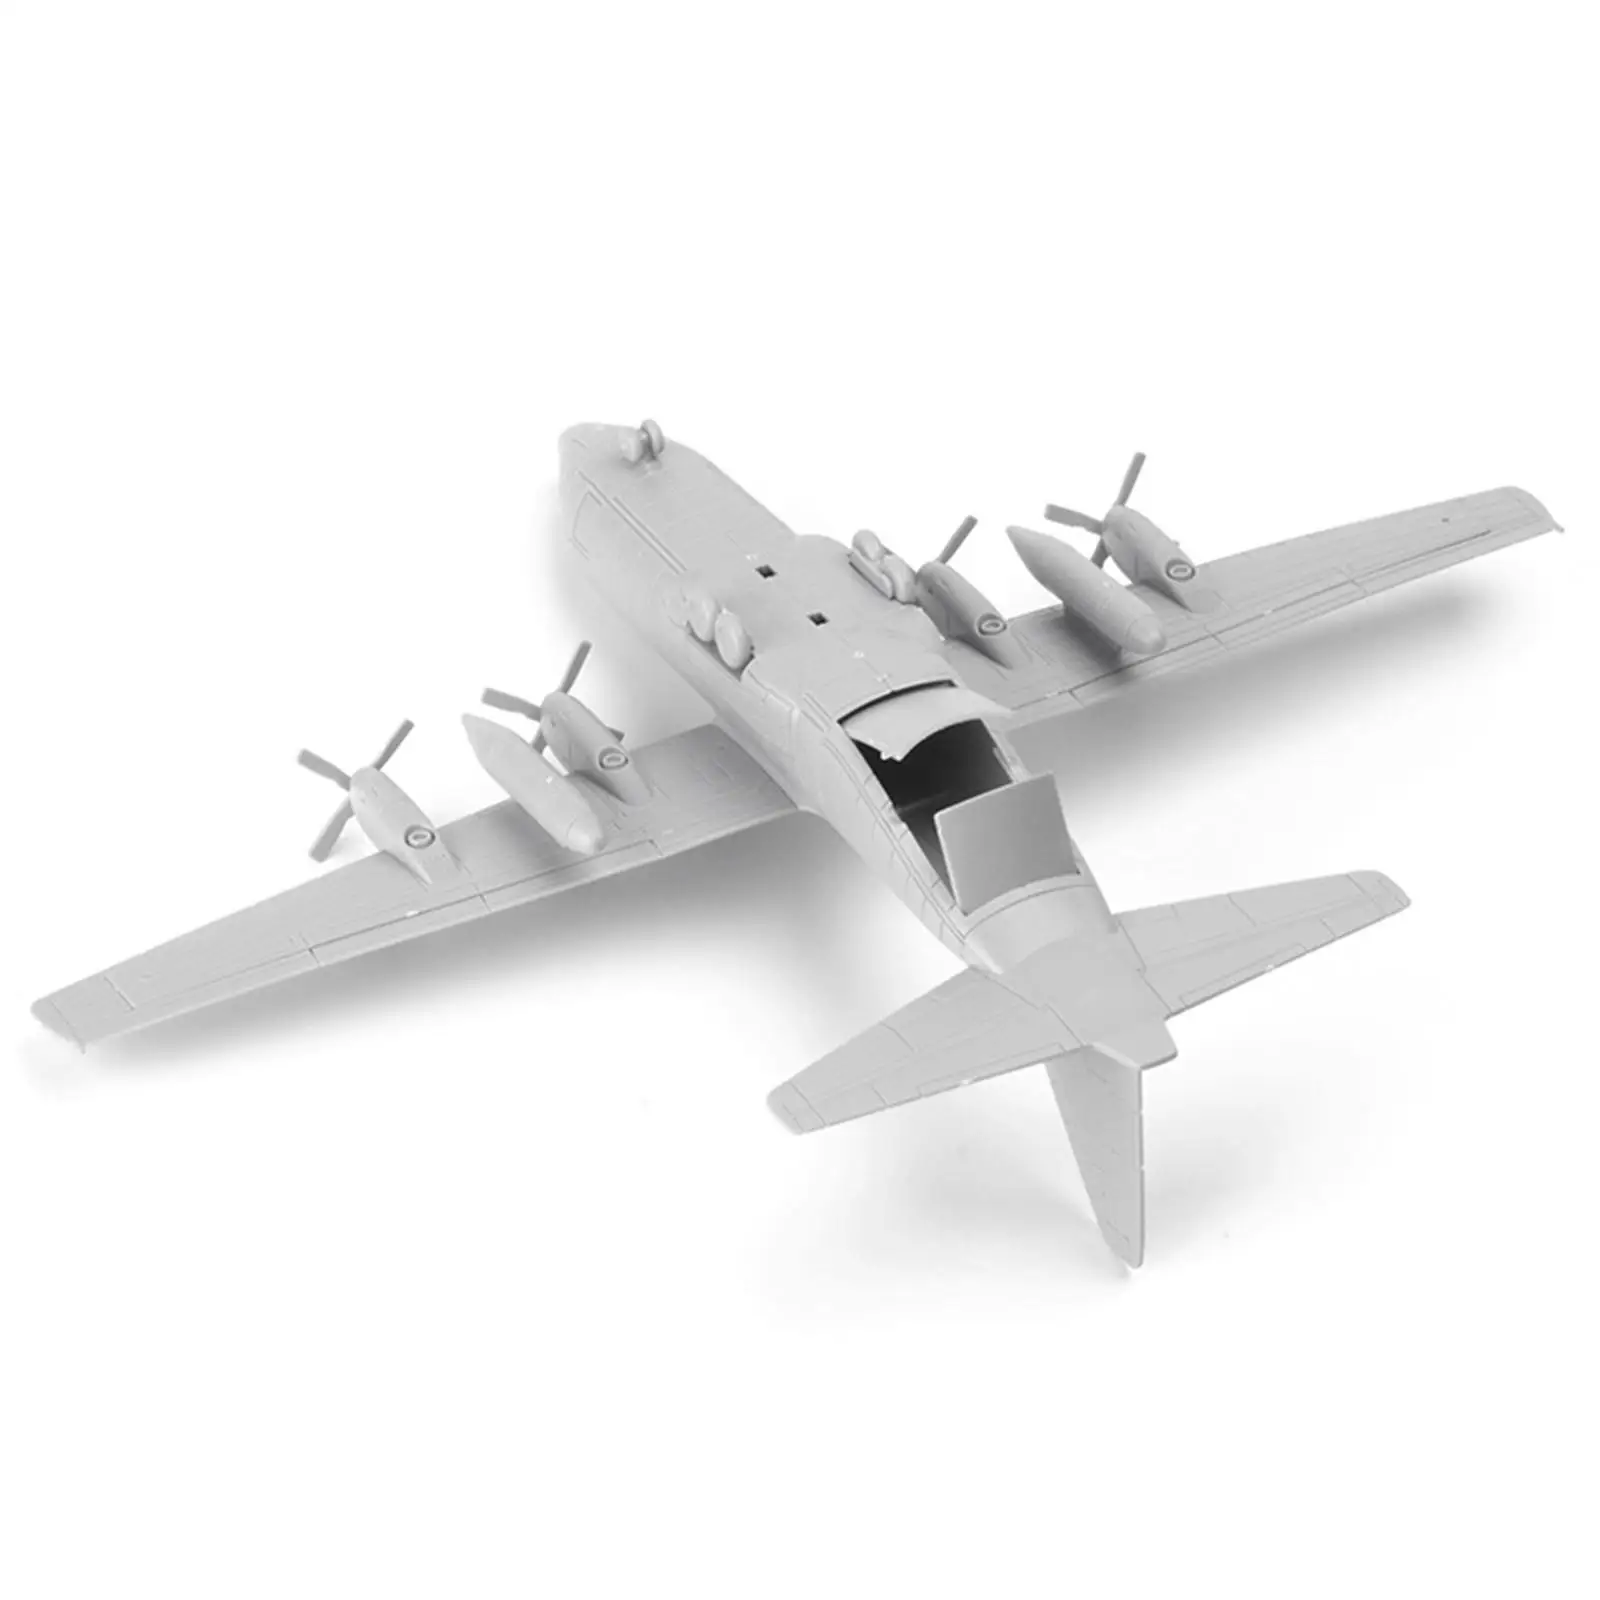 1/144 Plane Model Diecast Plane Fighter Model for Office Birthday Gifts